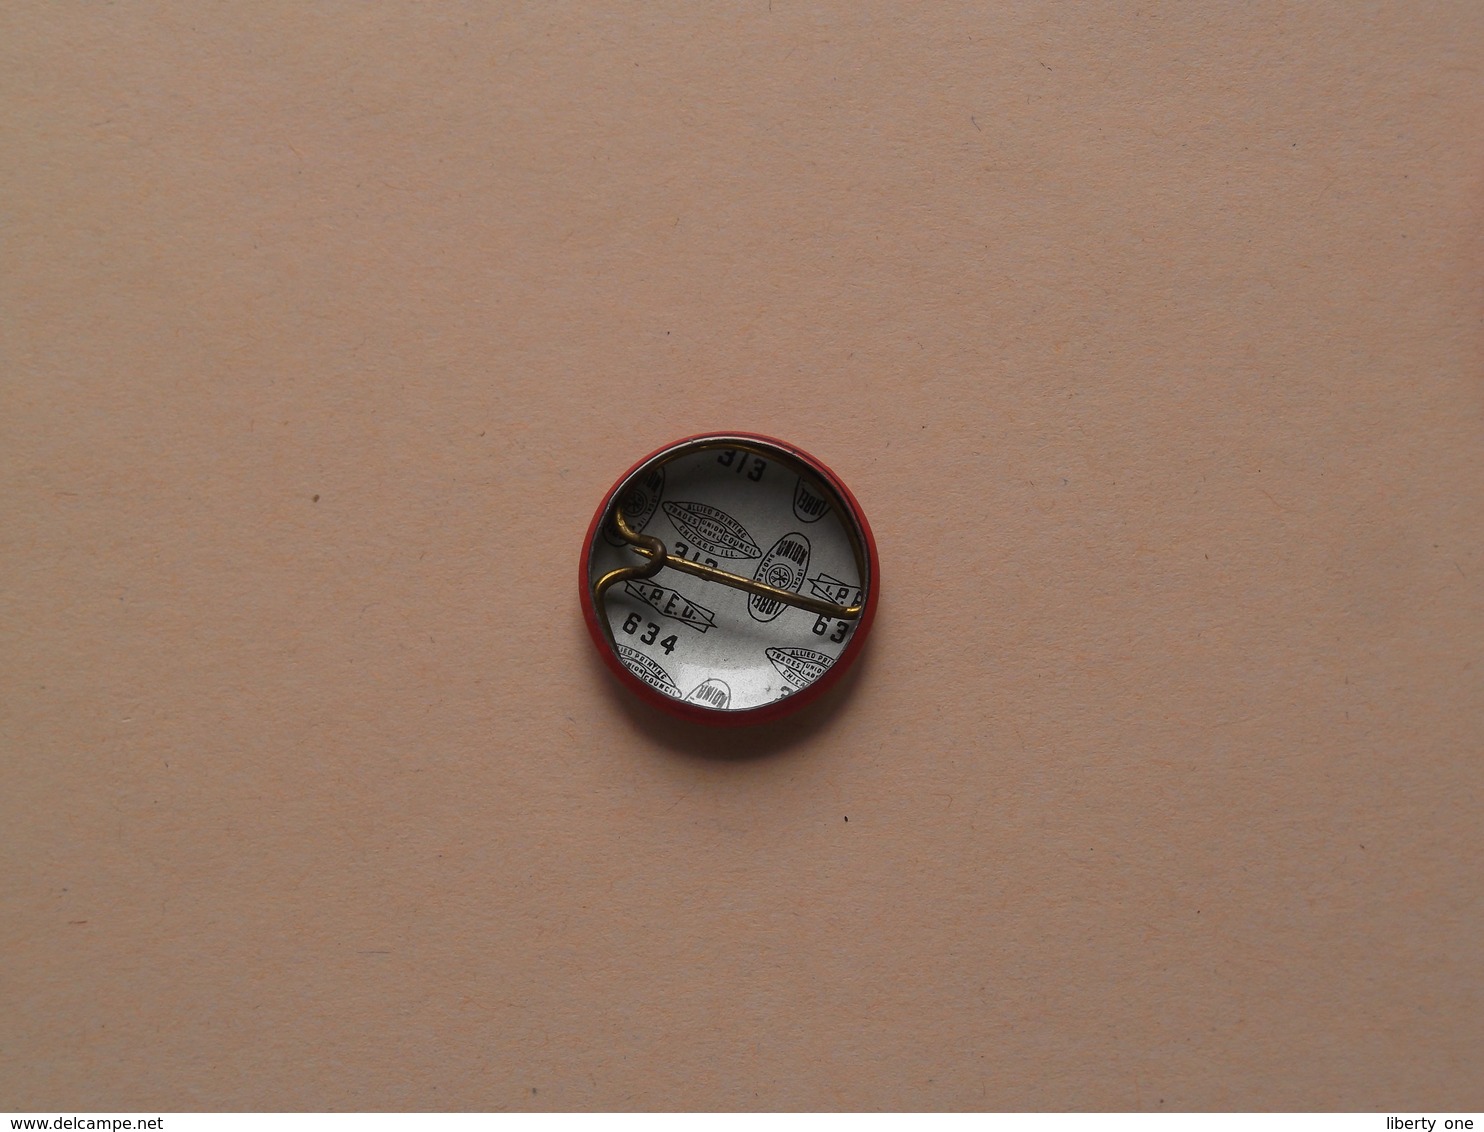 BEGINNER SWIMMER ( Red Cross ) Older Button / Pin / Speld / Epingle ( +/- 2 Cm. ) Zie Foto Voor Detail / Metal Button ! - Zwemmen